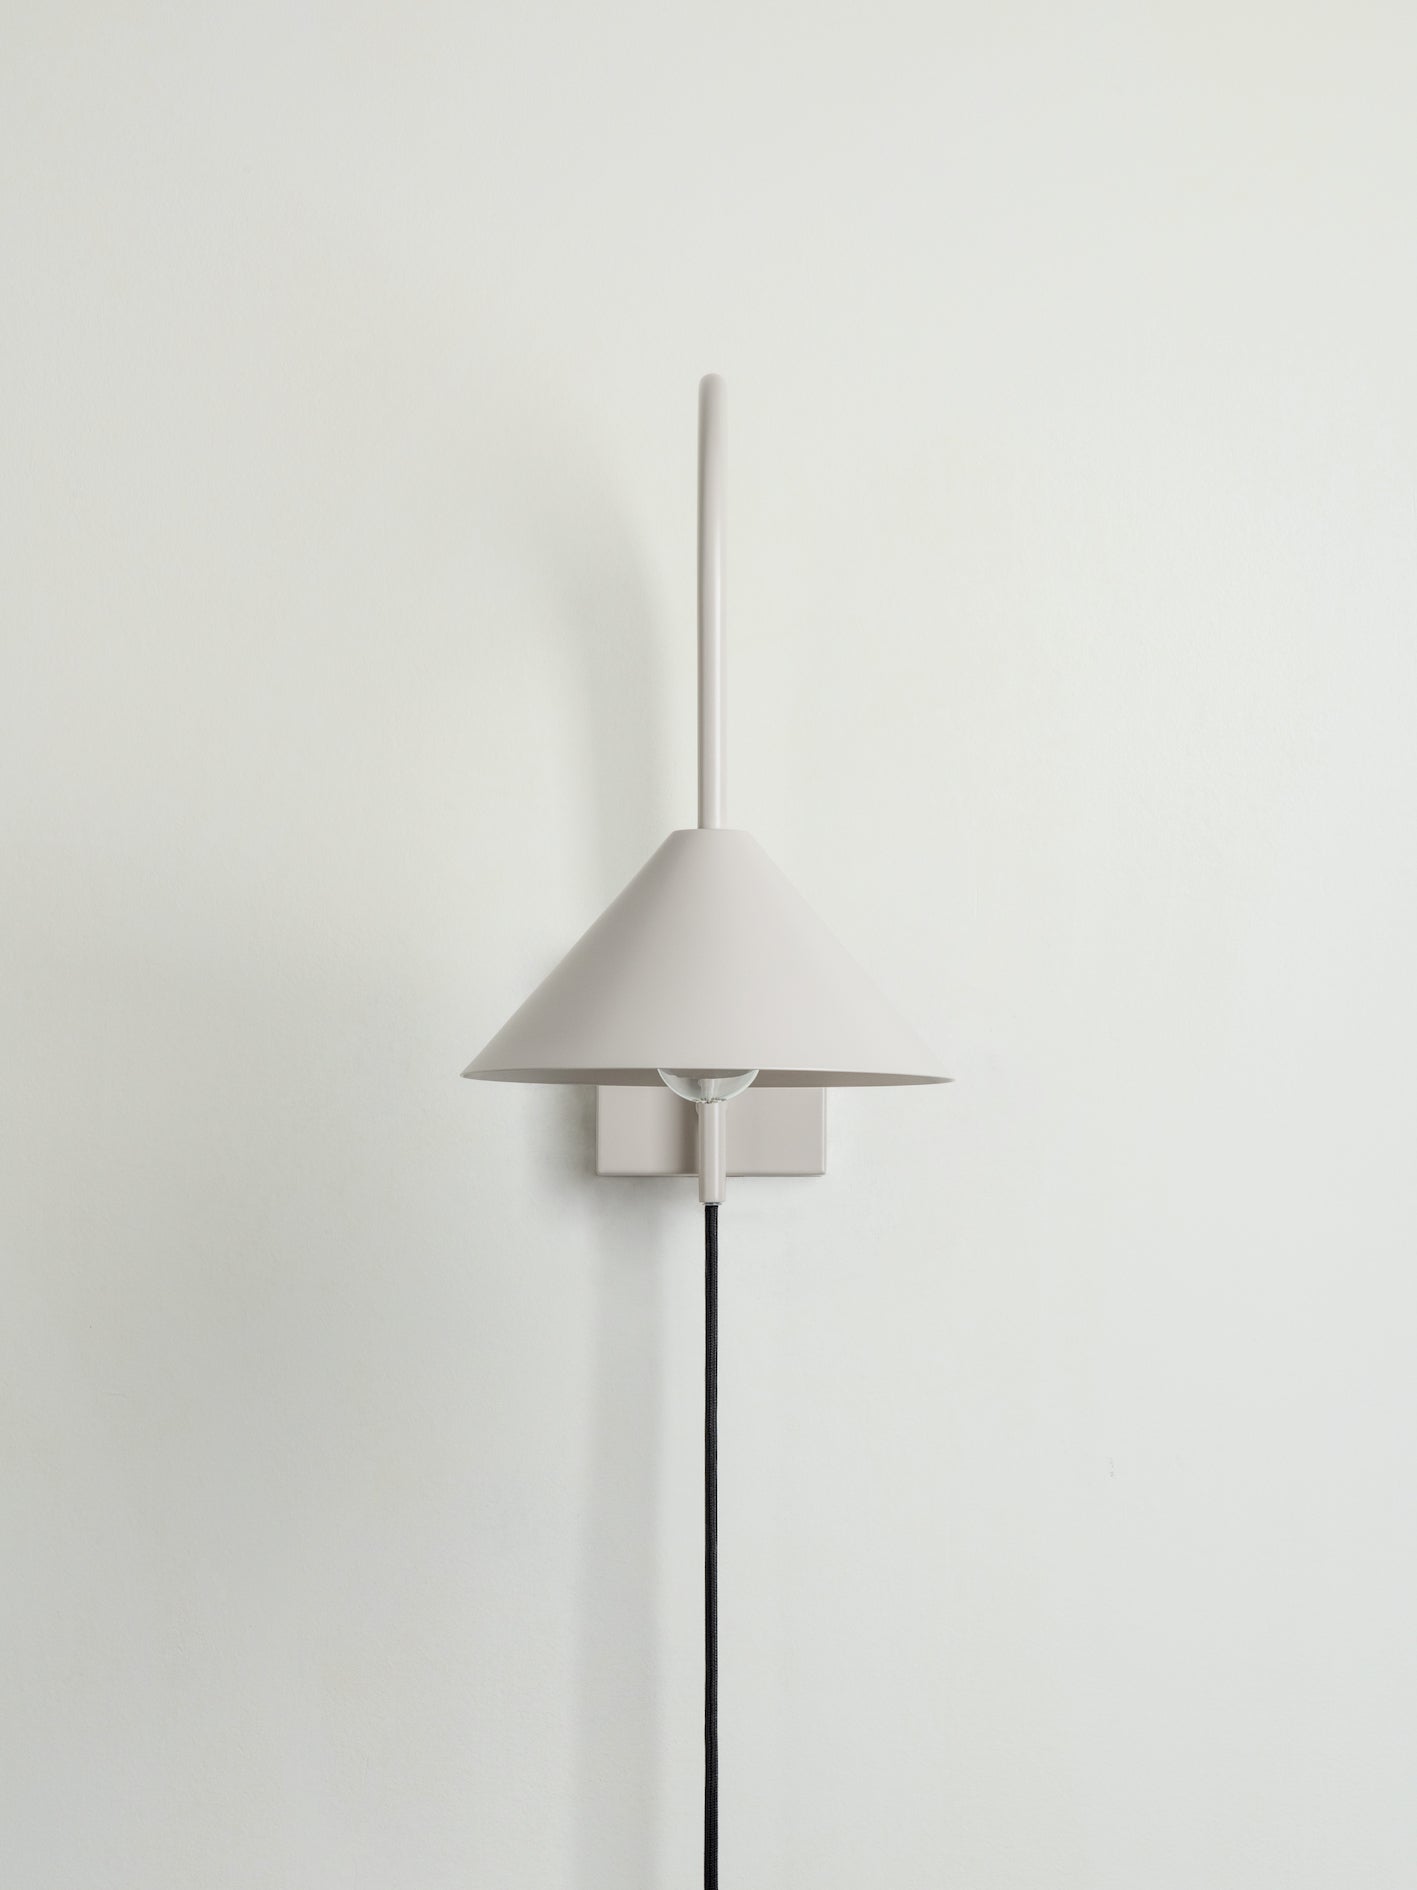 Orta - 1 light warm white cone wall light | Wall Light | Lights & Lamps | UK | Modern Affordable Designer Lighting